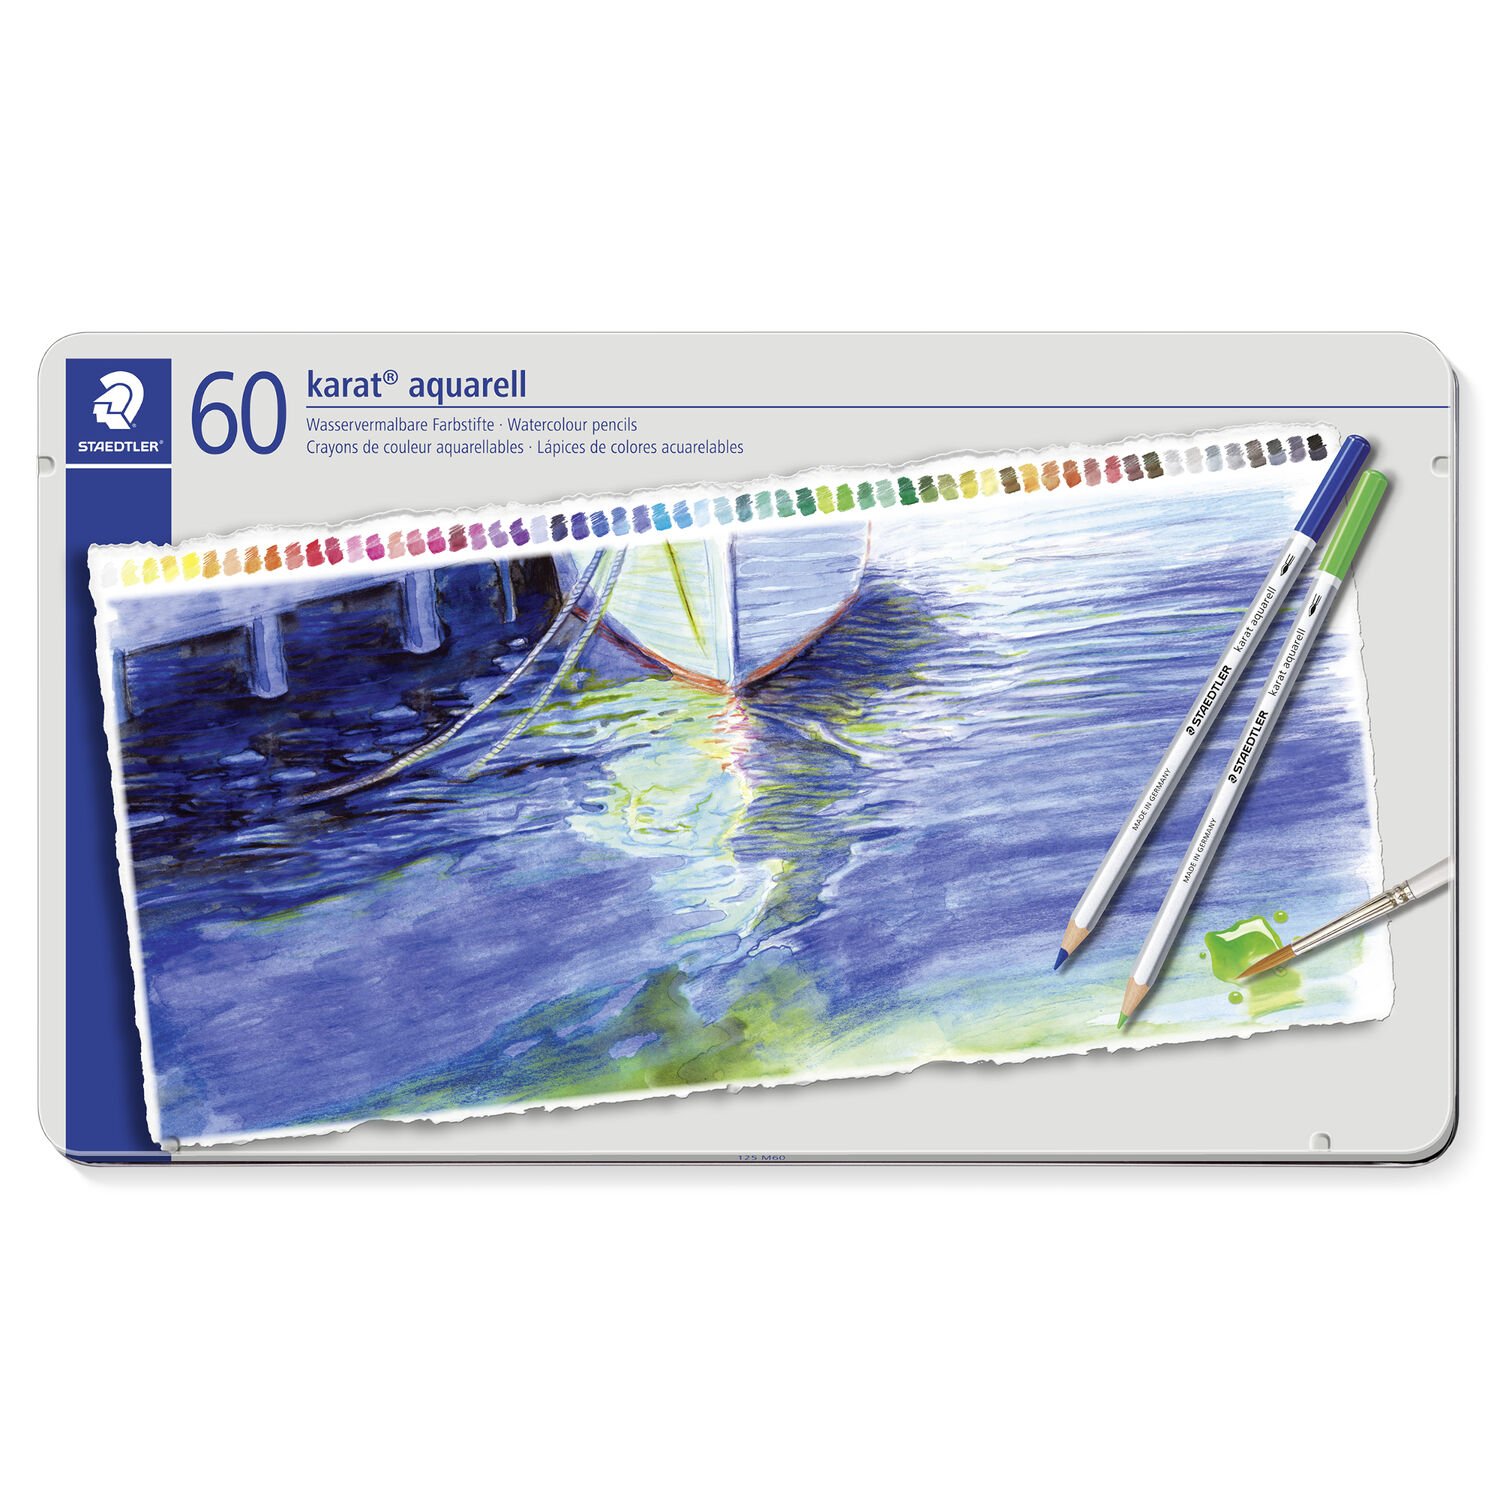 karat® aquarell 125 - Watercolour pencil | STAEDTLER